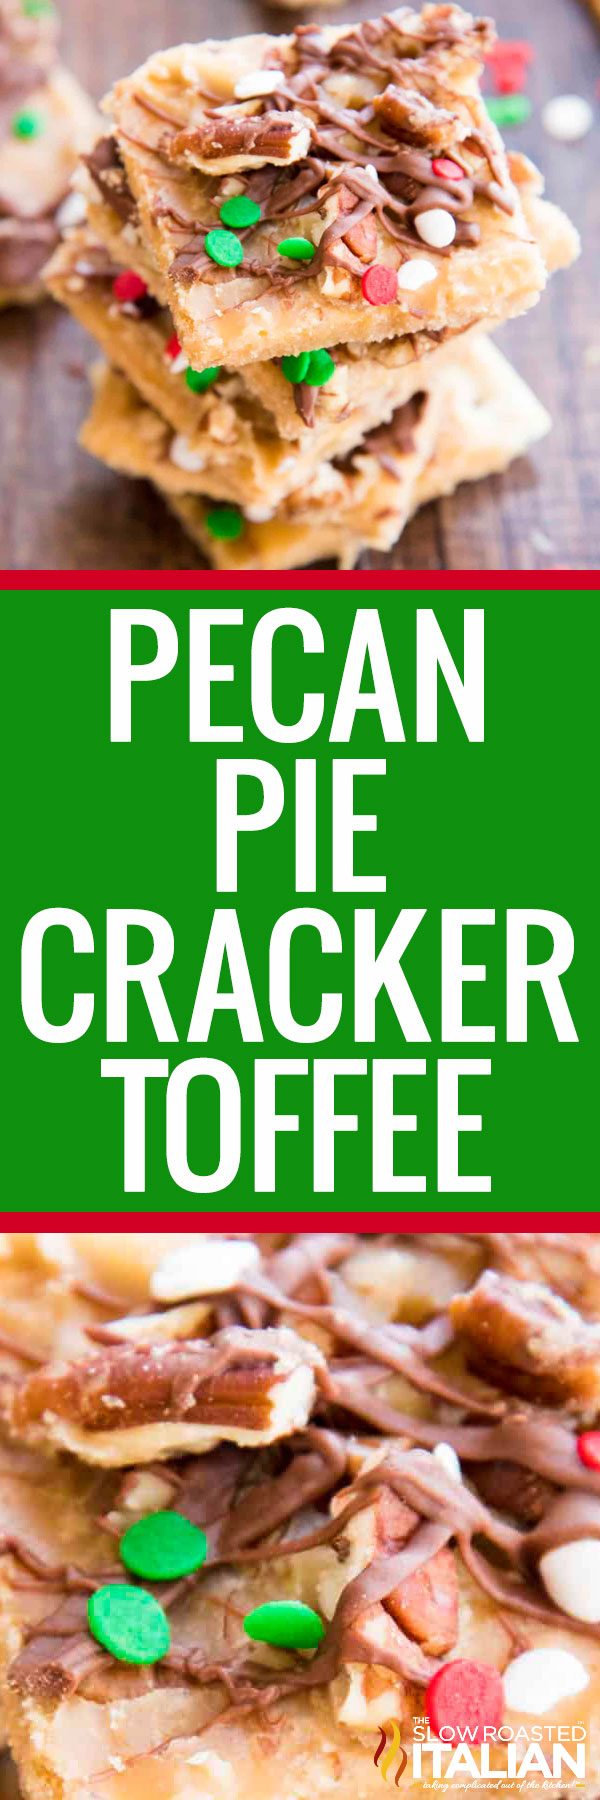 pecan-pie-cracker-toffee-pin-9354687